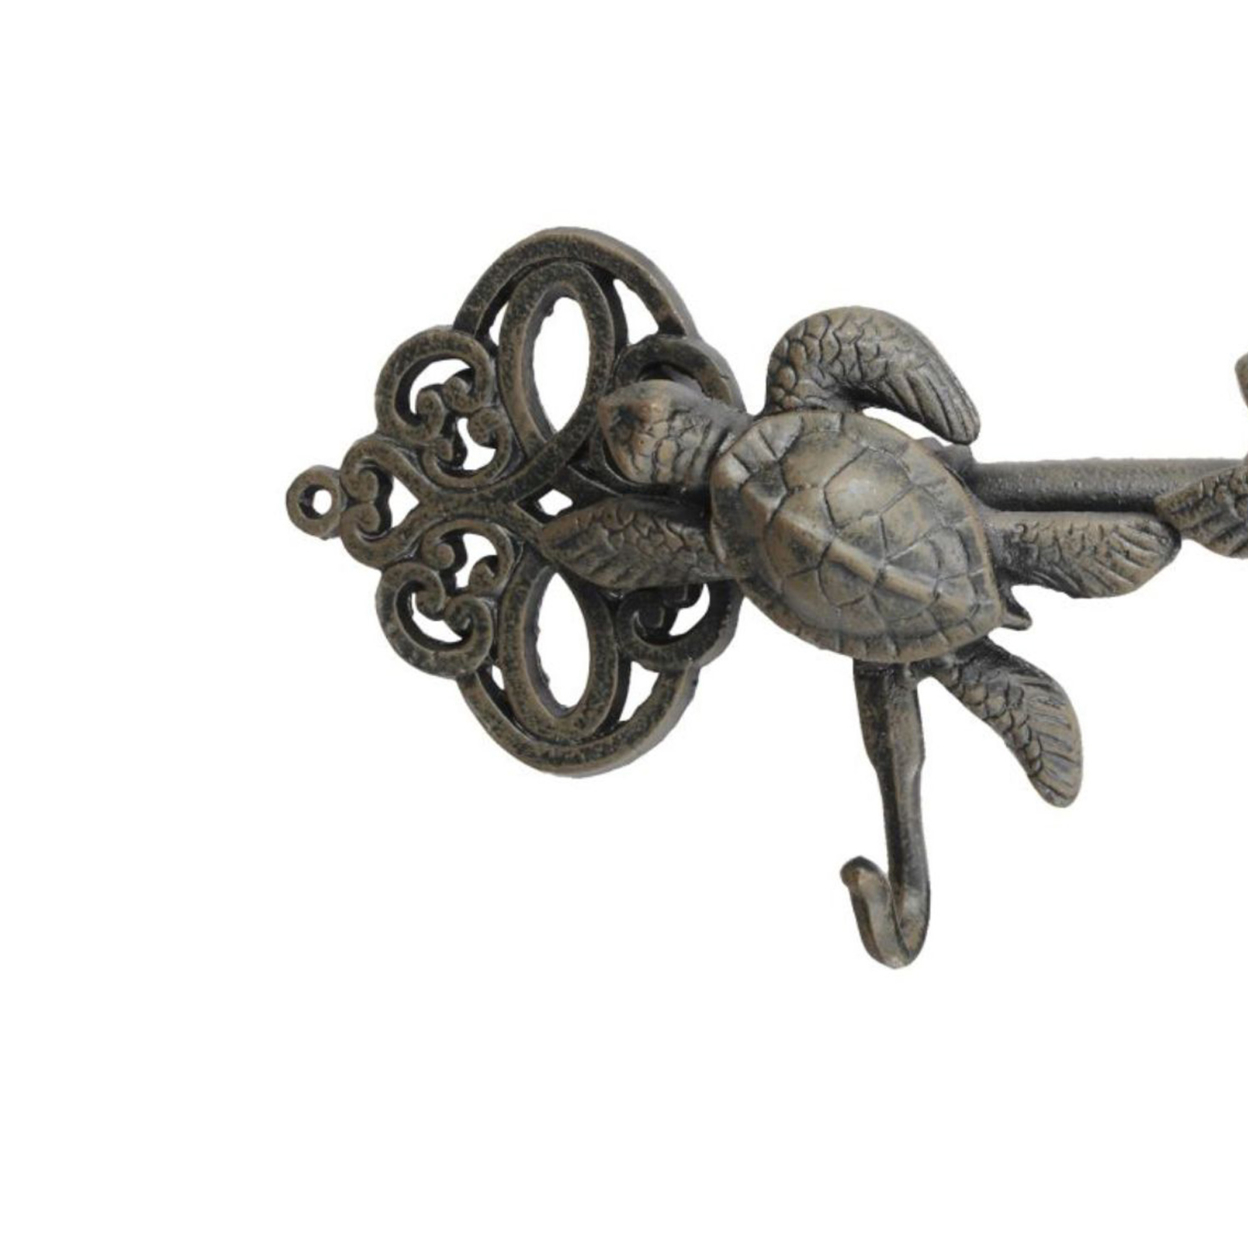 Decorative Sea Turtles Iron Wall Hook On Antique Key, Gray- Saltoro Sherpi